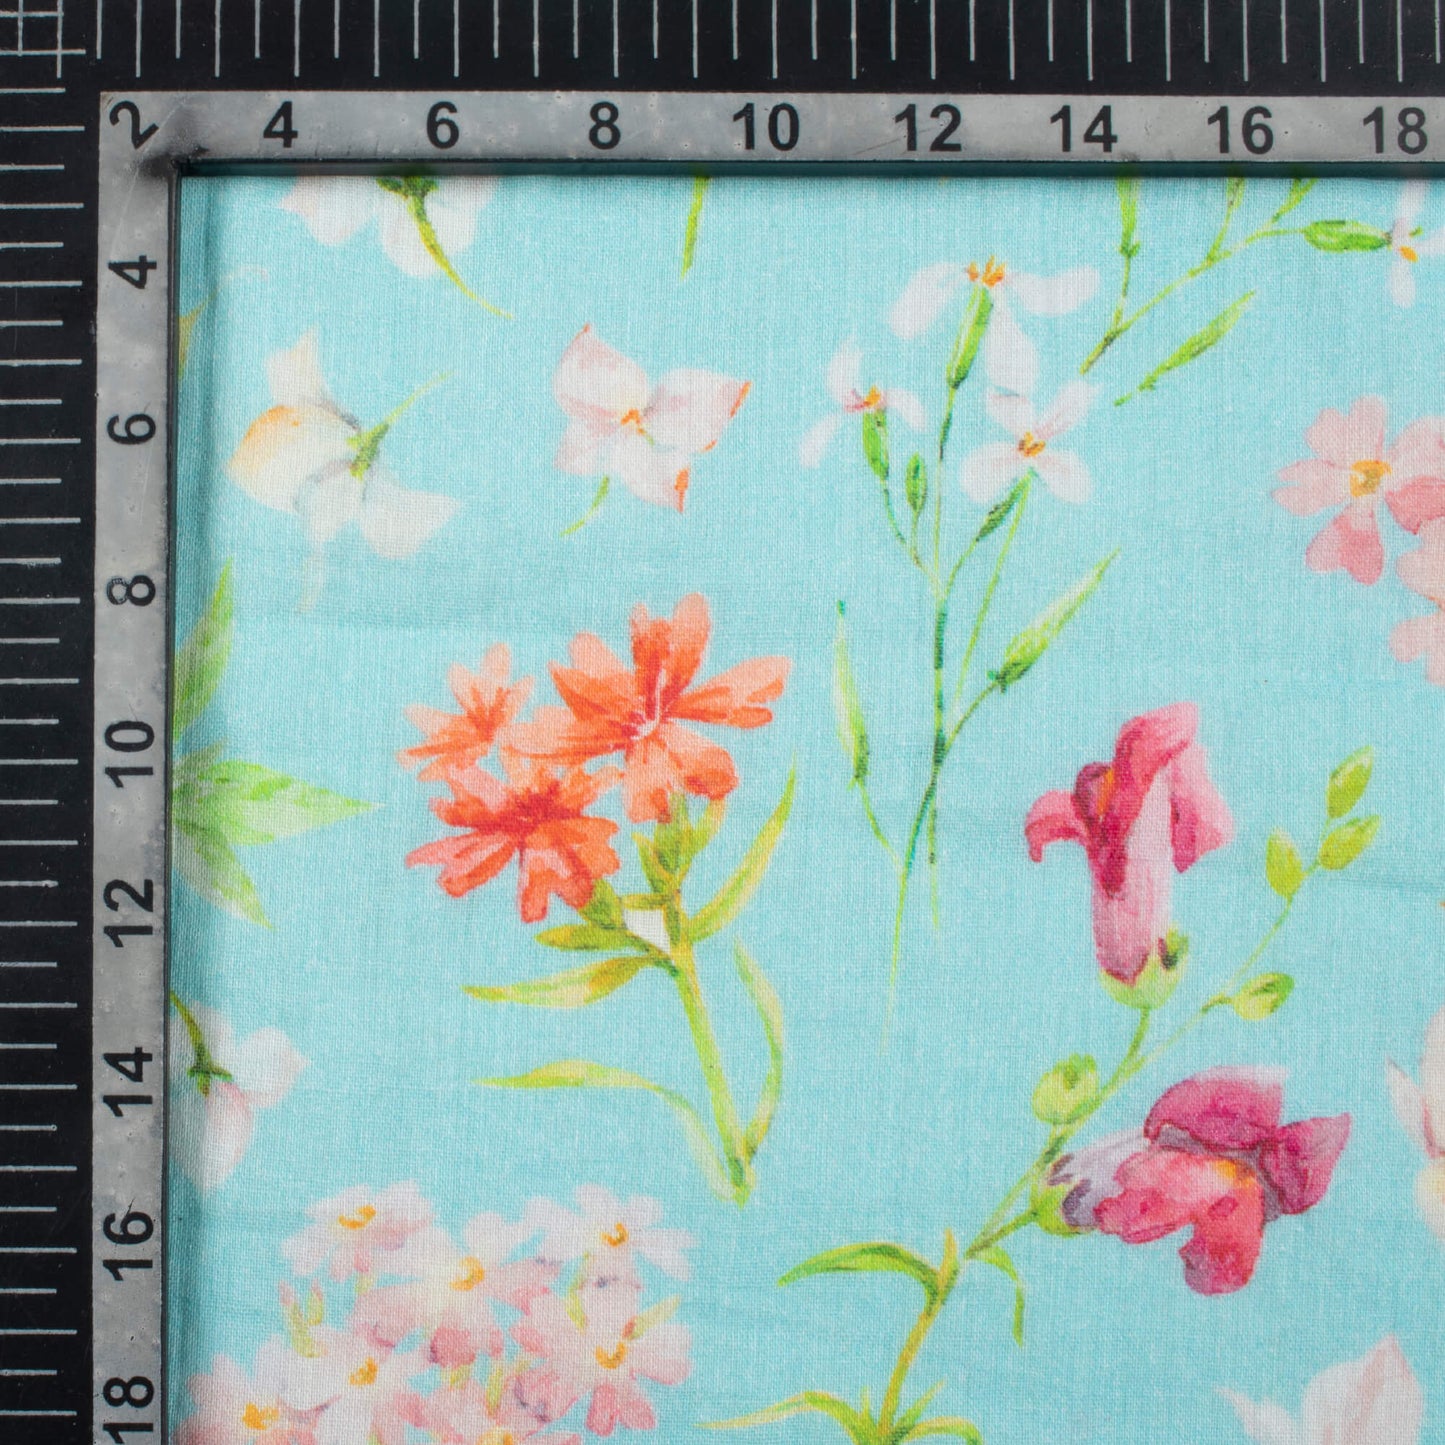 Buy Blue Digital Print Pure Silk Fabric Online at TradeUno – TradeUNO  Fabrics